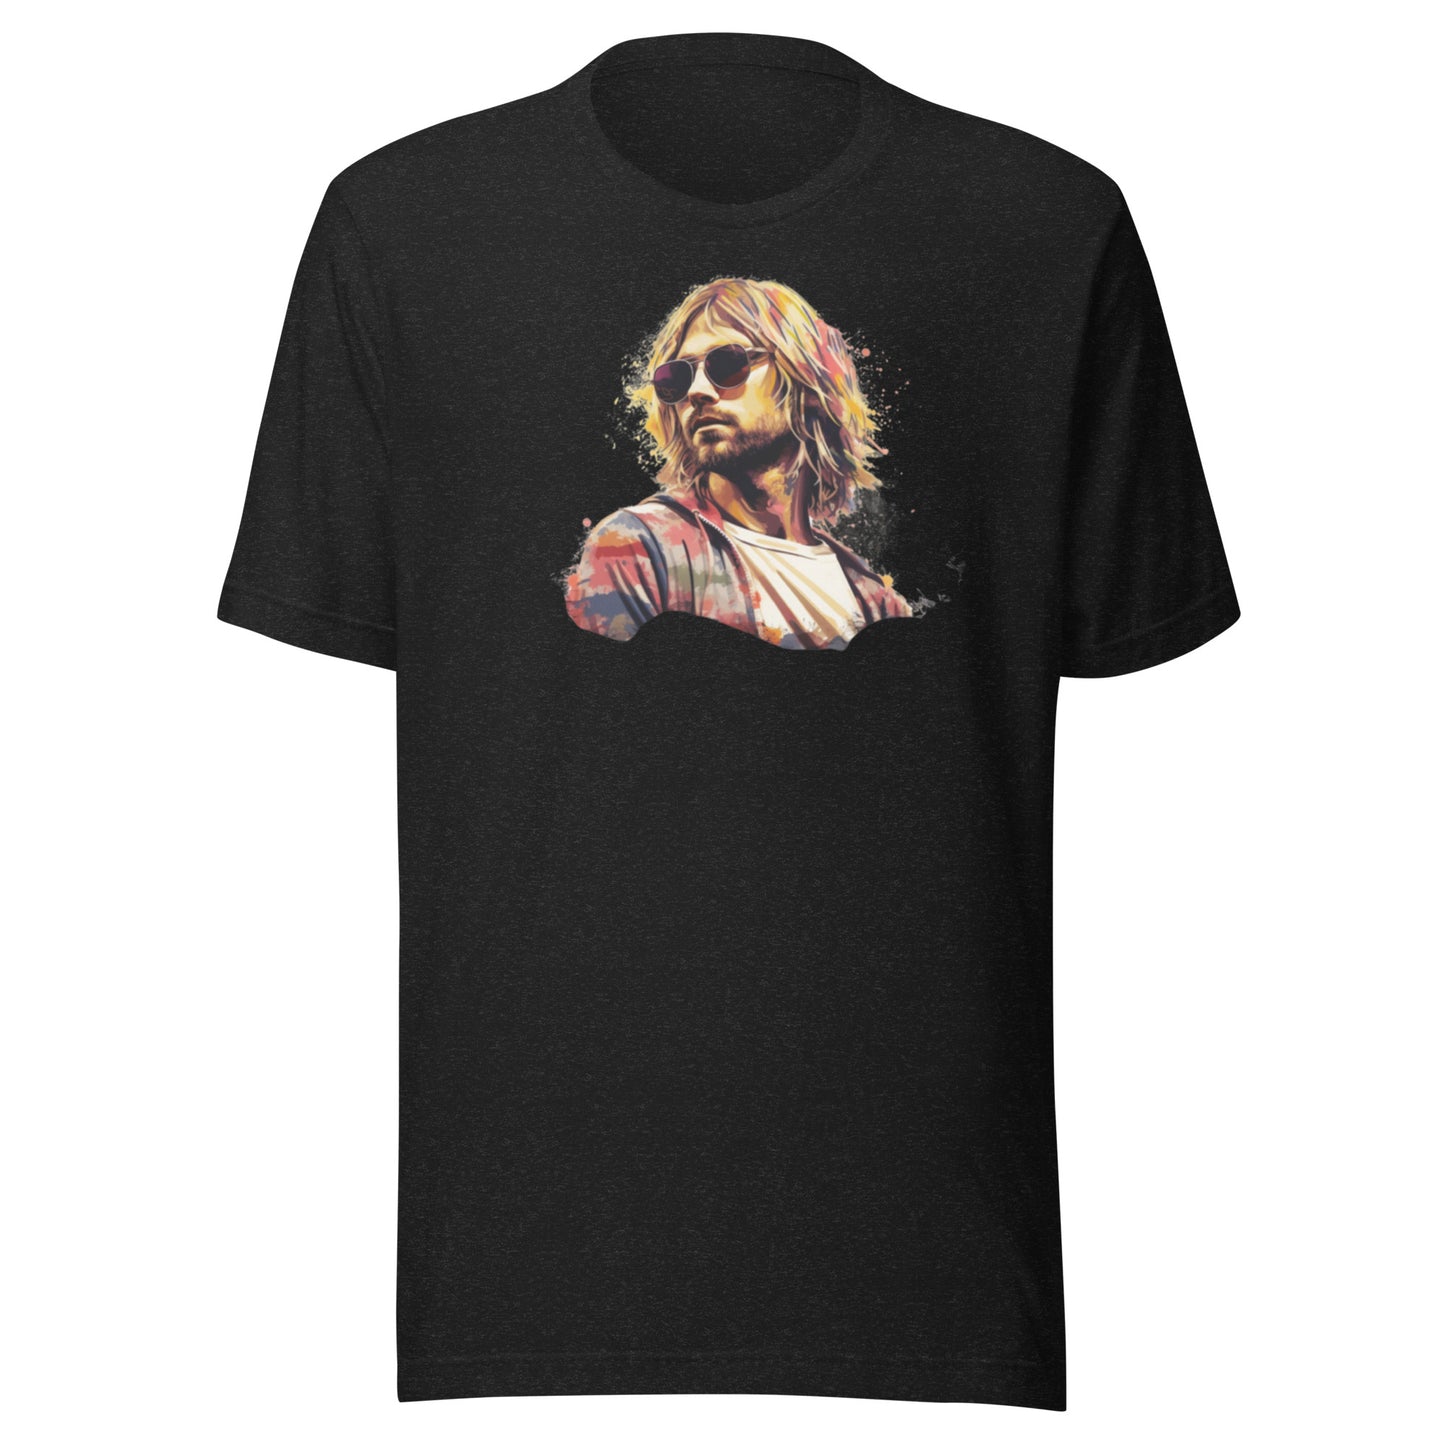 Nirvana shirt, Kurt Cobain Shirt, Music Tee, Trendy shirt, retro shirt, Retro Shirt